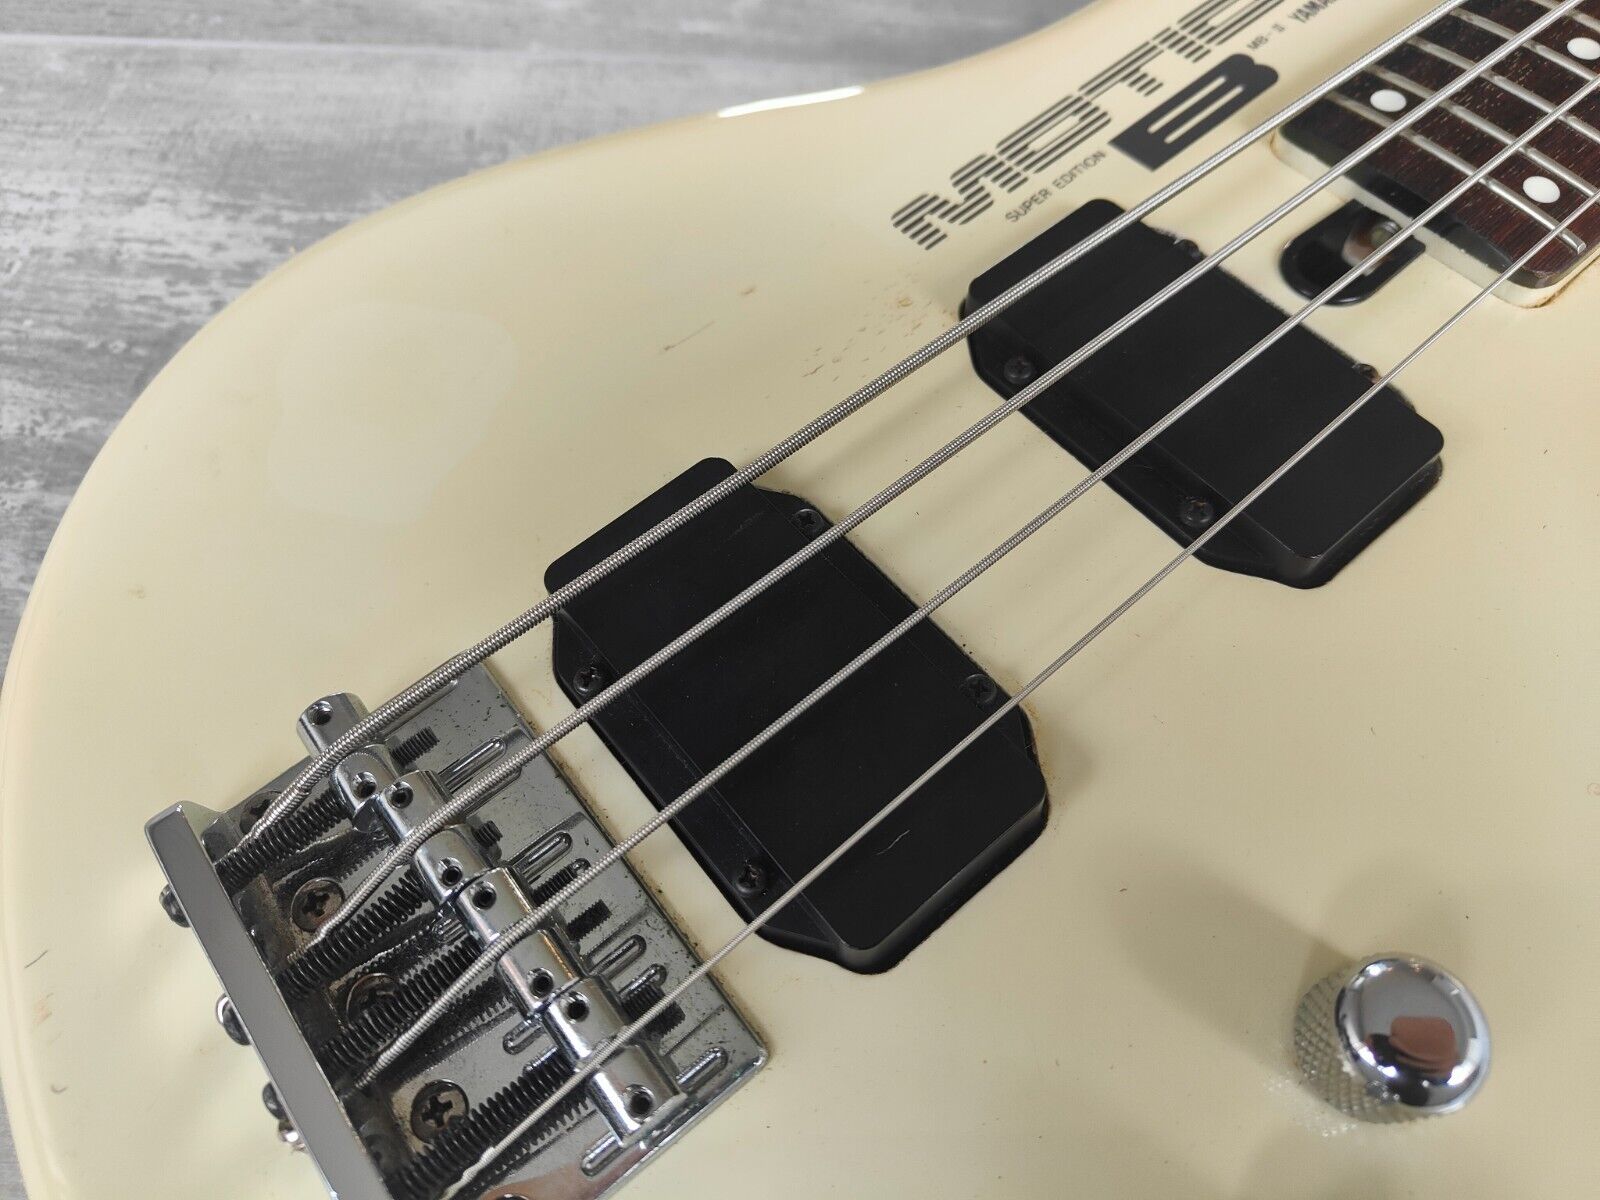 1990's Yamaha MB-III Motion B Short Scale Bass (White)